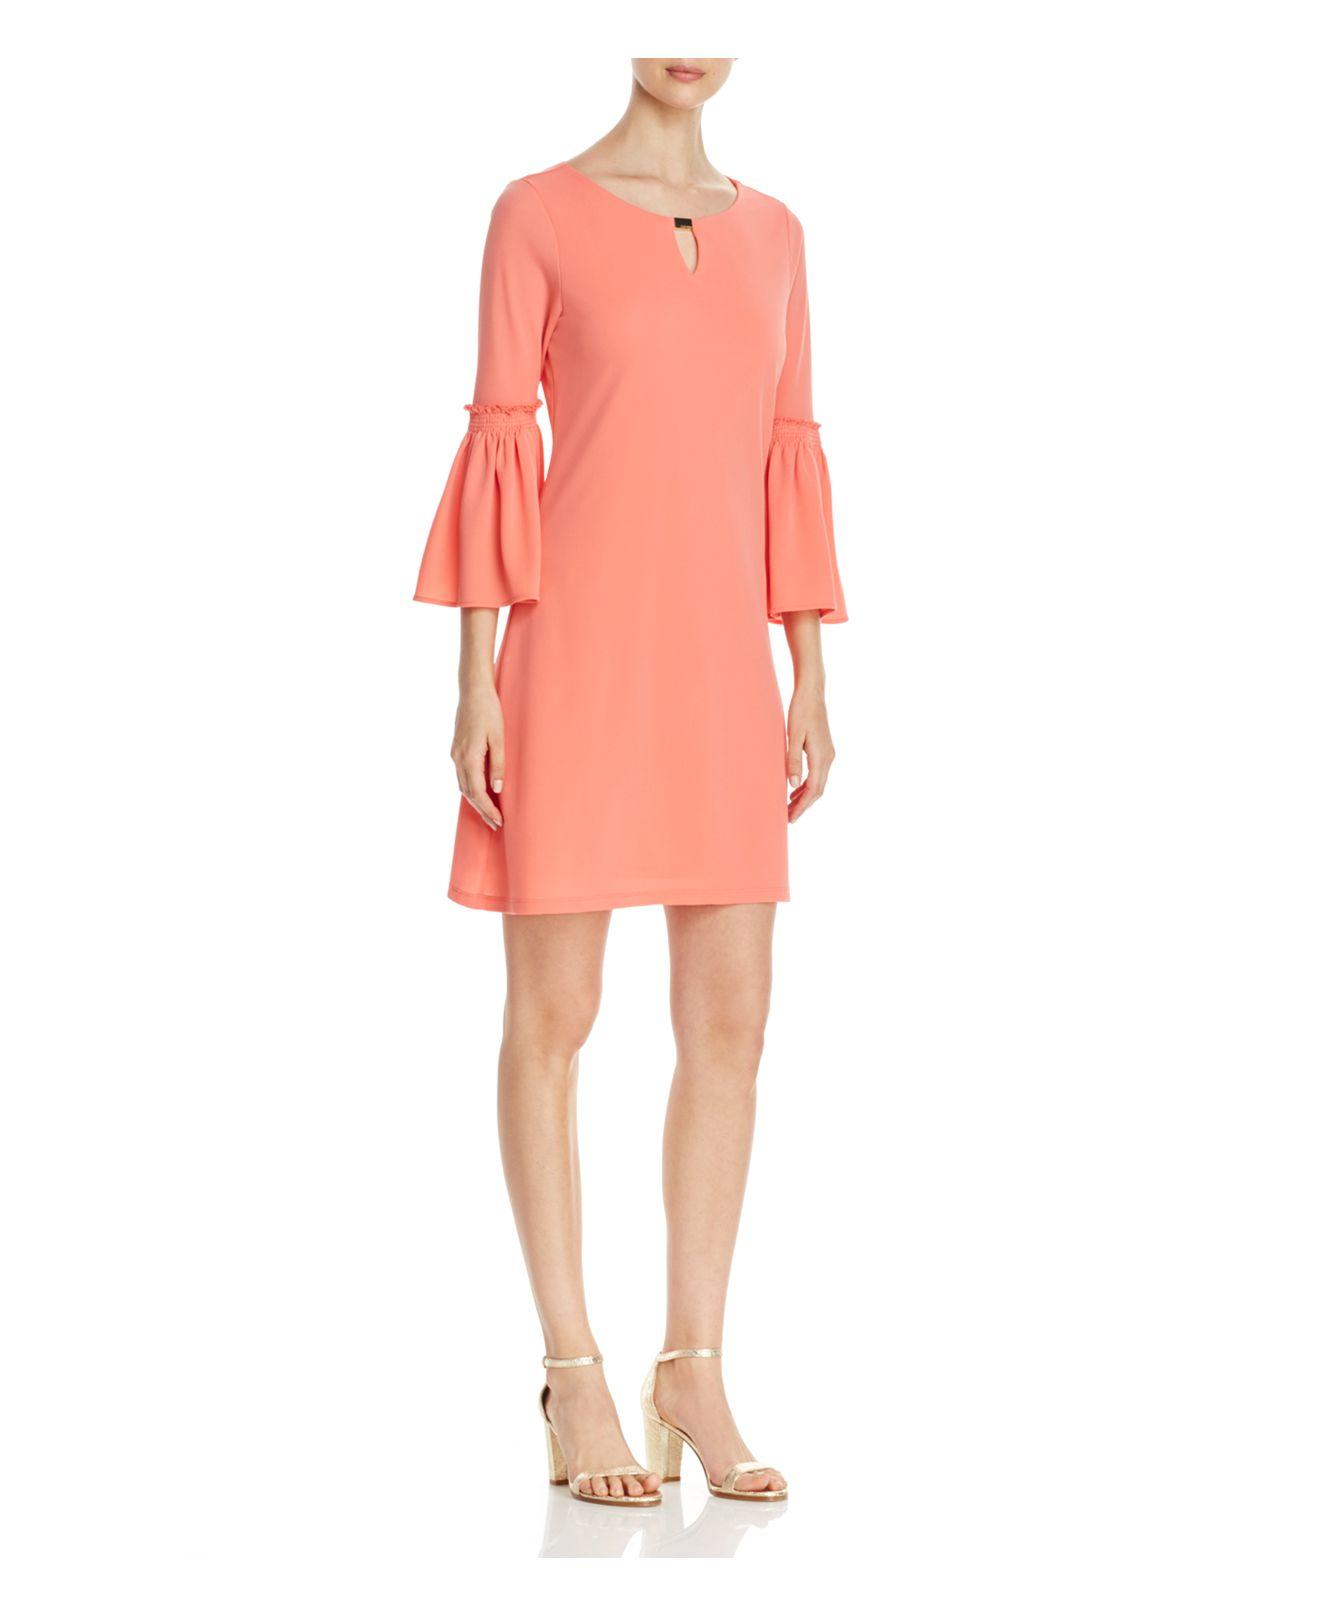 Lyst - Calvin Klein Bell Sleeve Keyhole Dress in Pink